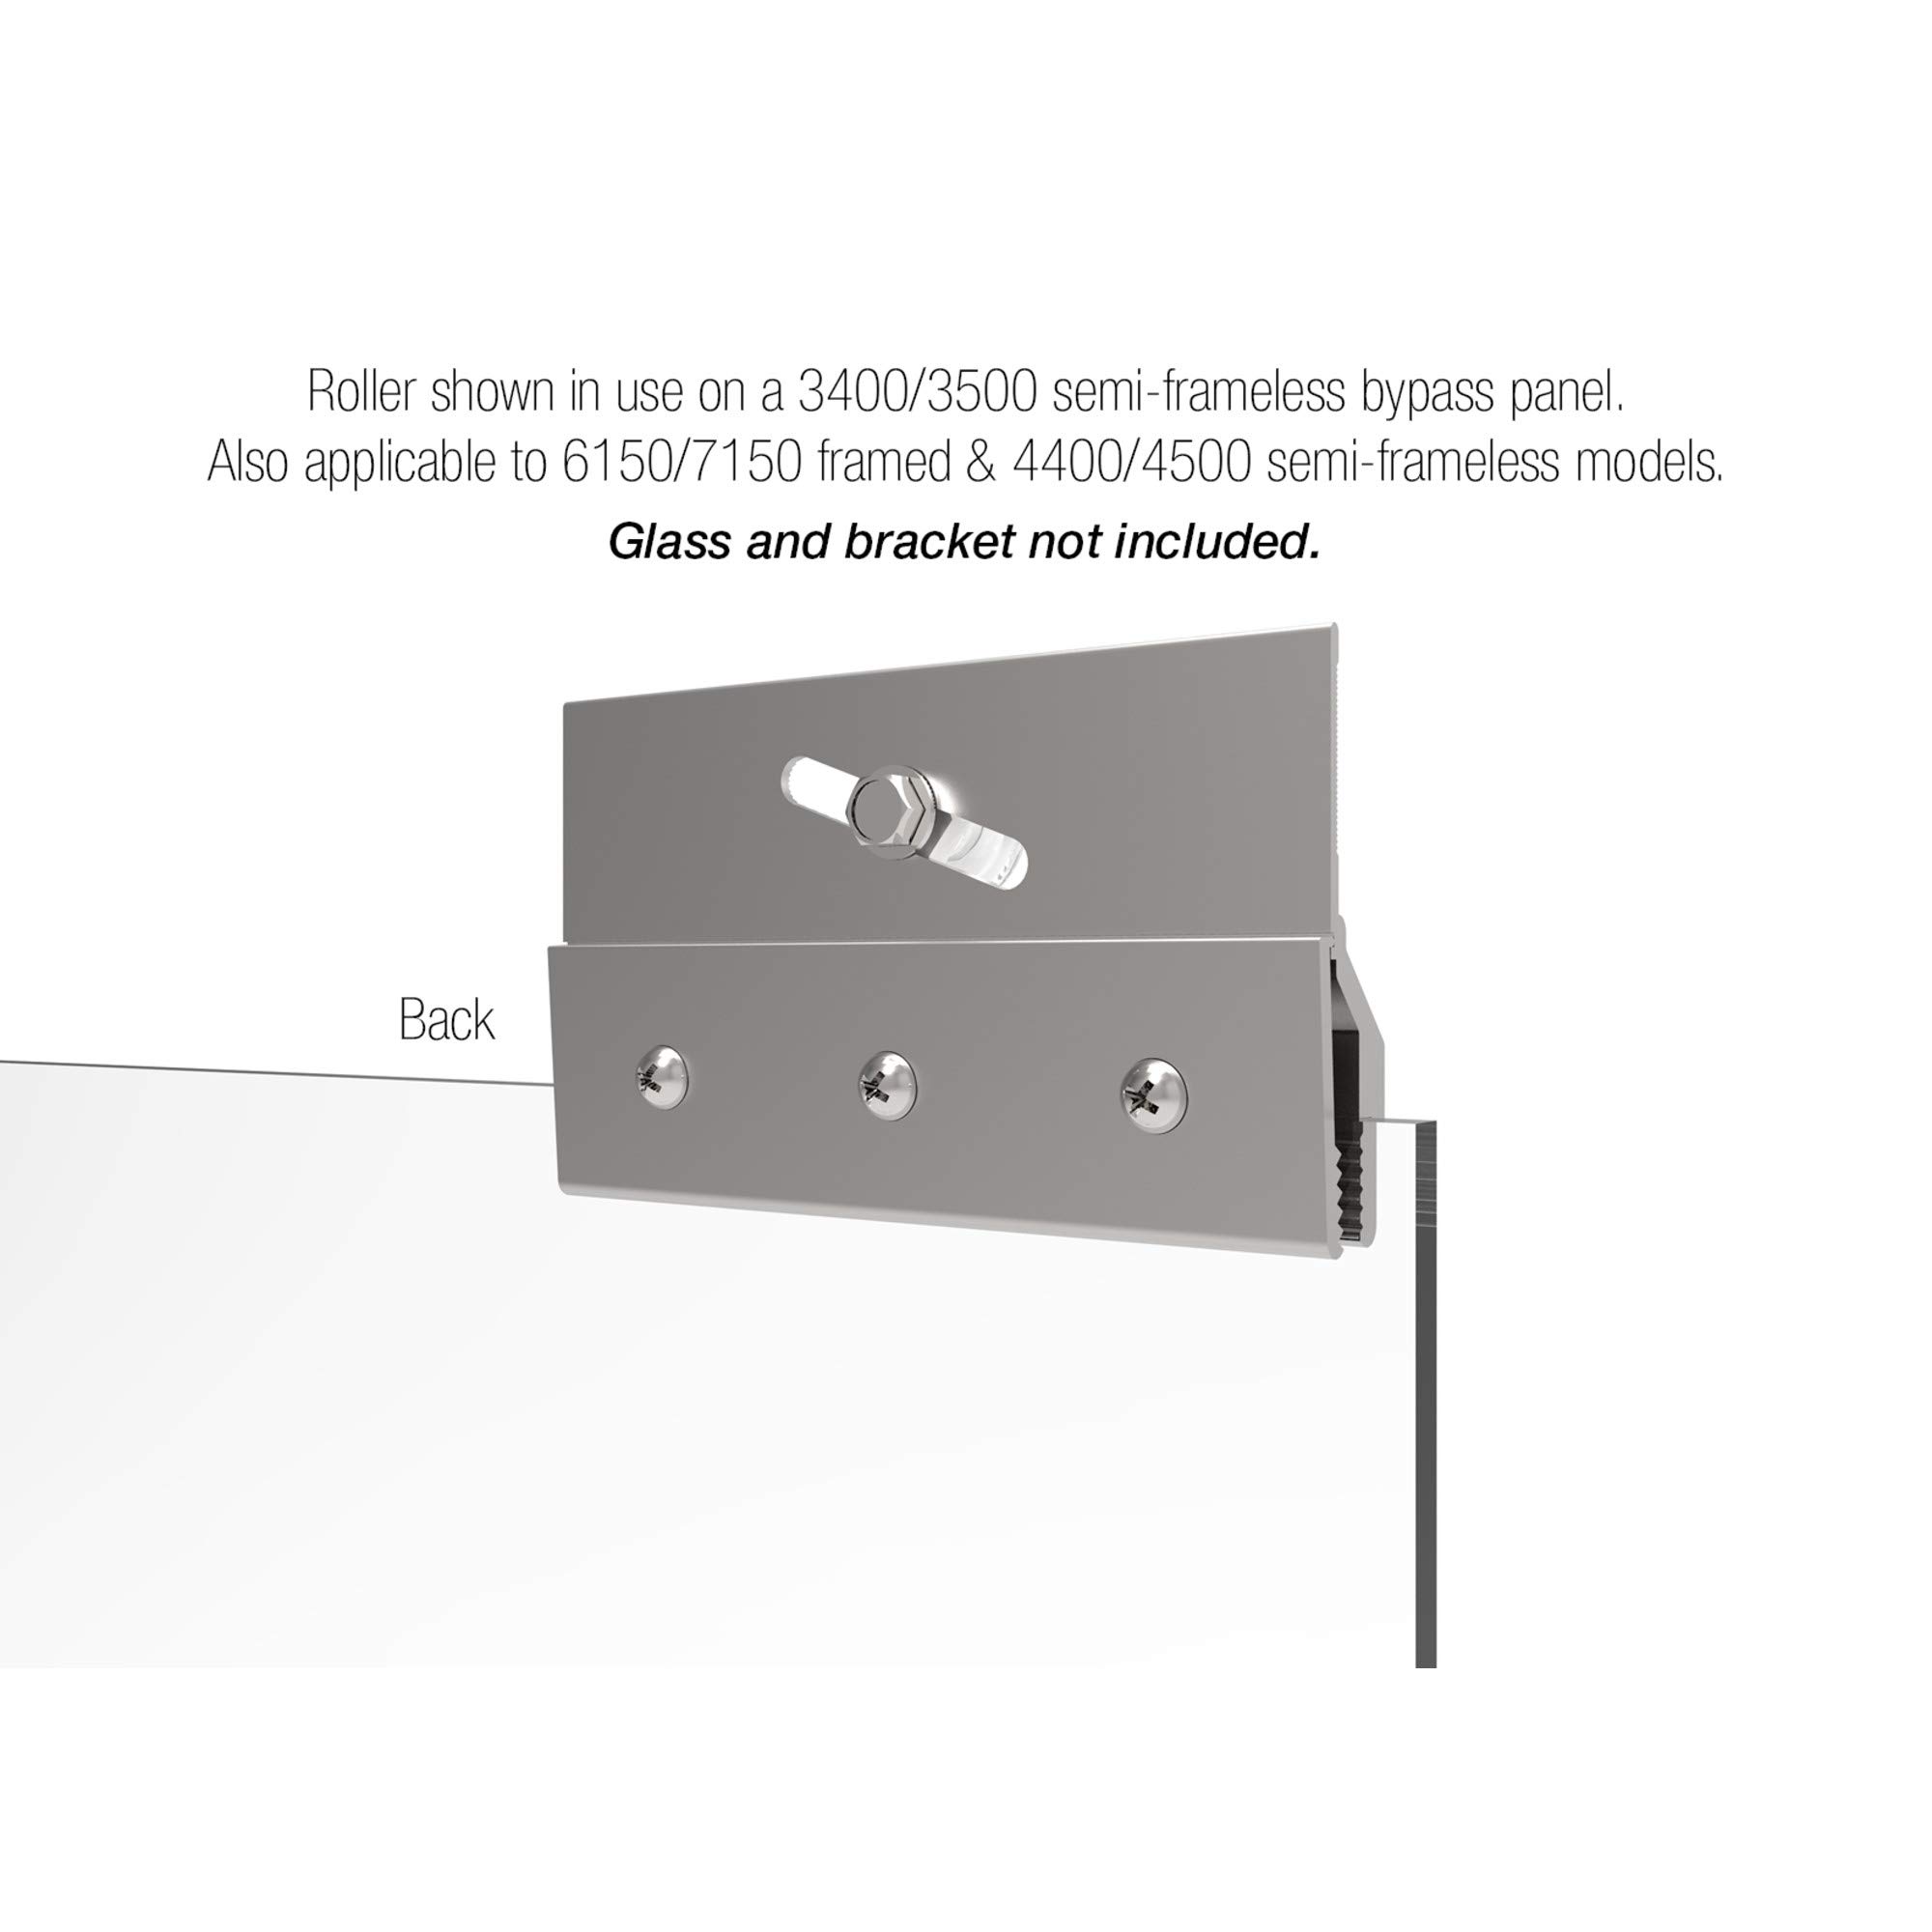 Basco Shower Door Rollers 3/4 inch Diameter Replacements for Sliding Shower Doors,White,ECPPROLLER